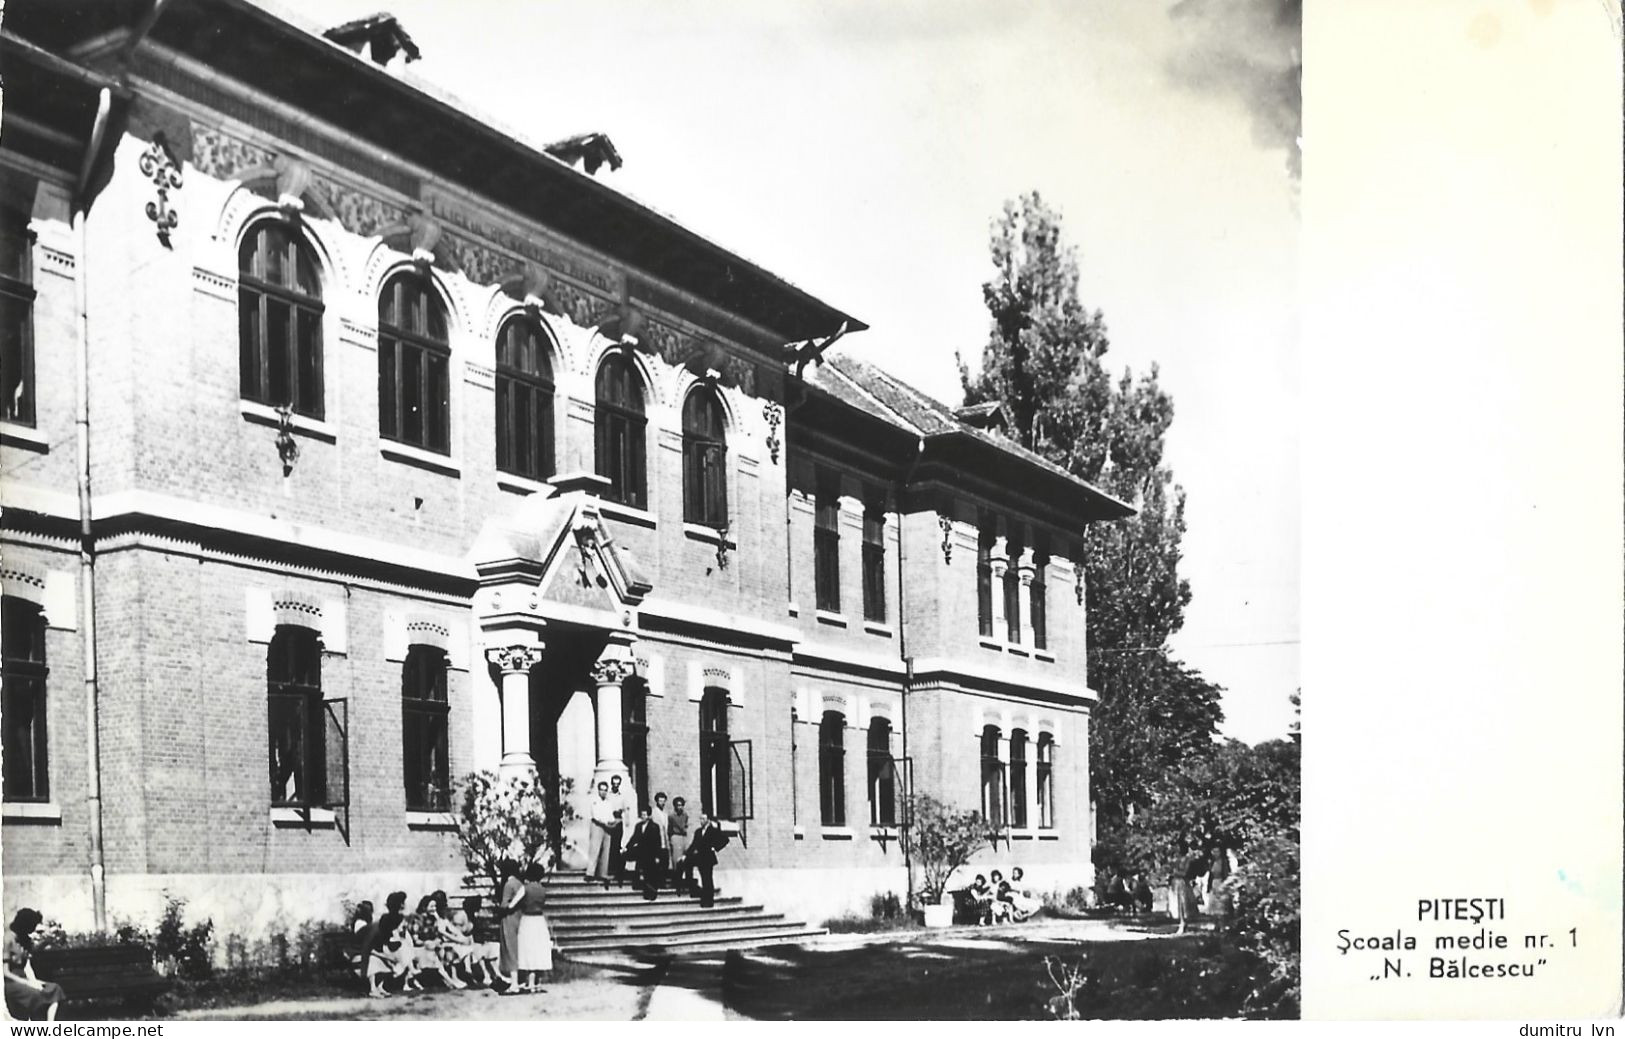 ROMANIA PITESTI - SECONDARY SCHOOL NO. 1 ''N. BALCESCU'', BUILDING, ARCHITECTURE, PEOPLE ON THE BENCH - Strafport